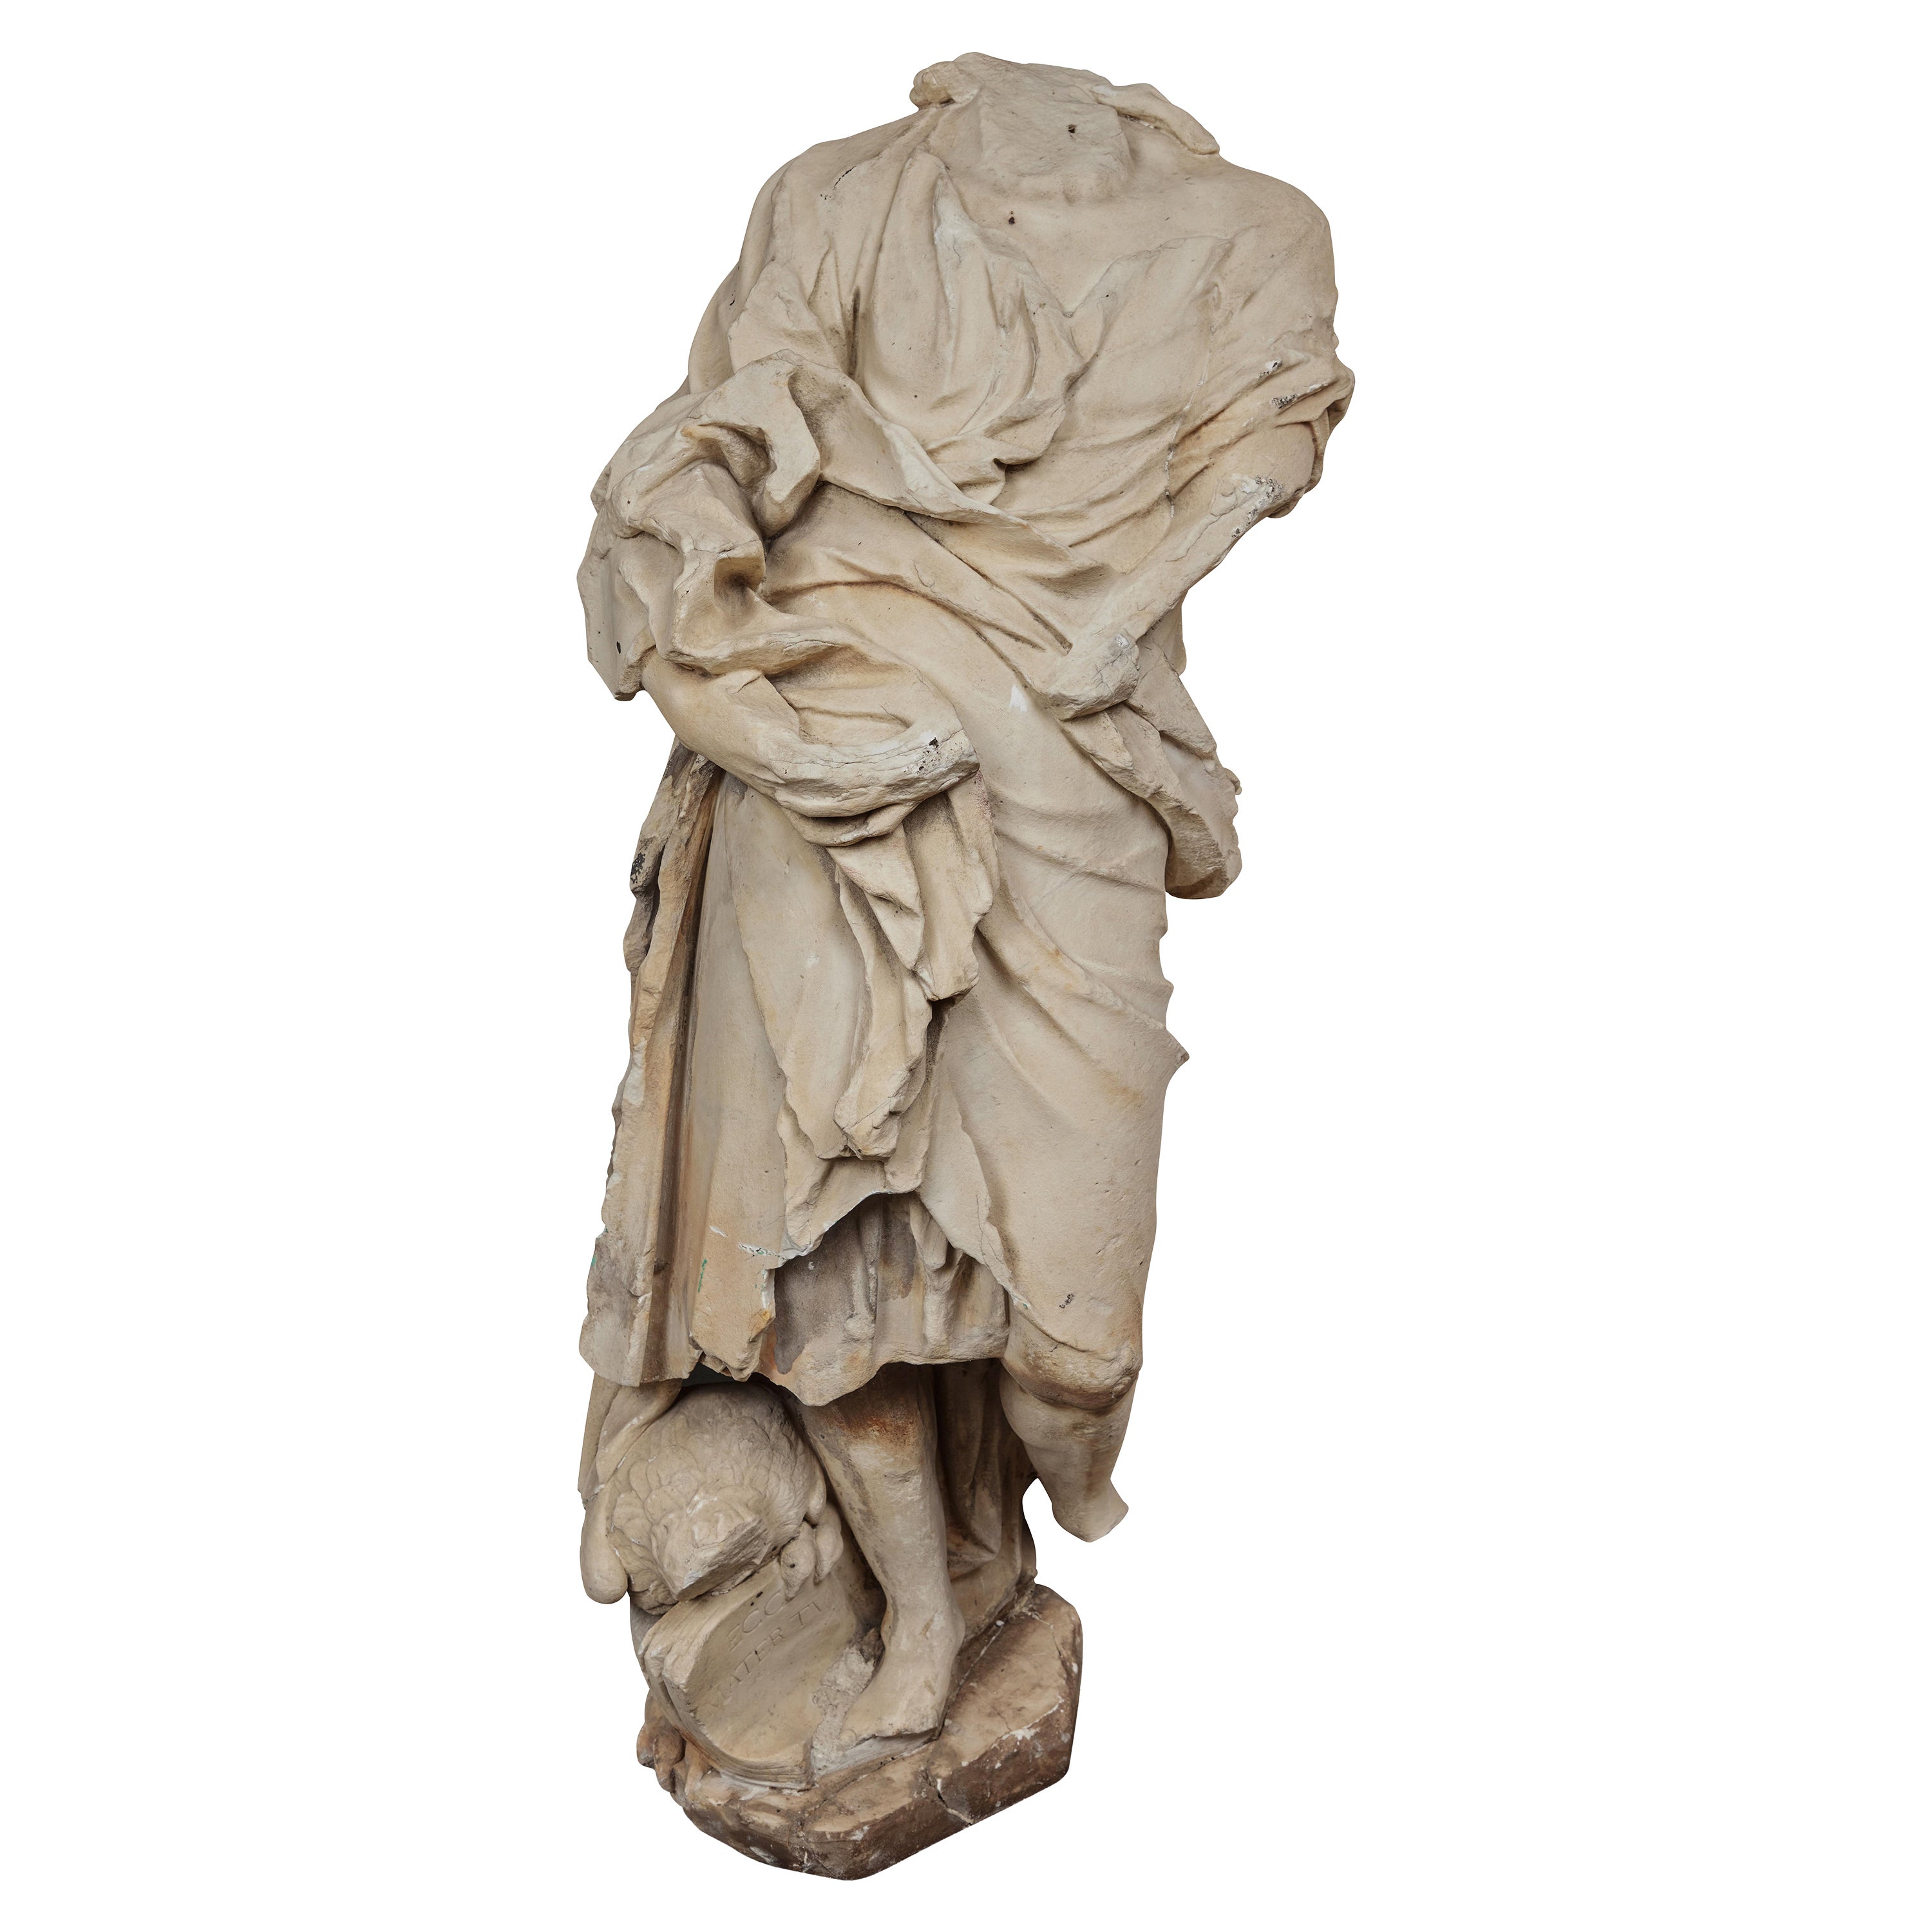 Life Sized Renaissance Era Marble Figure